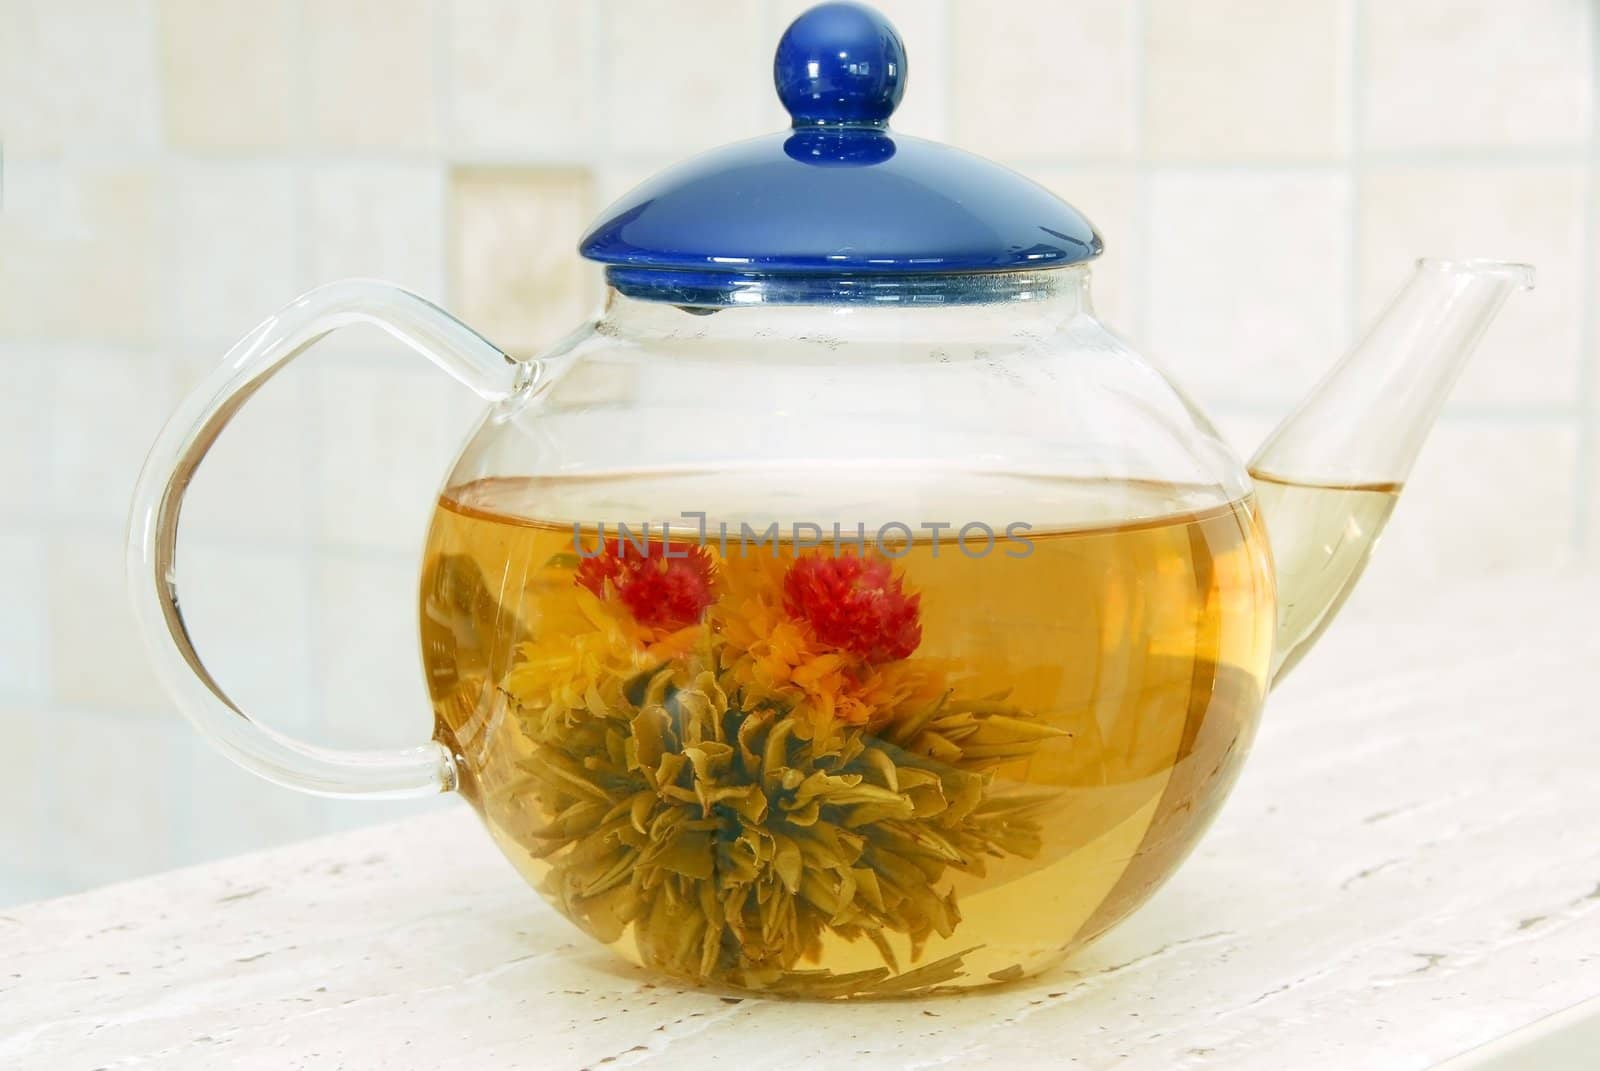 aromatic green tea flower in glass pot